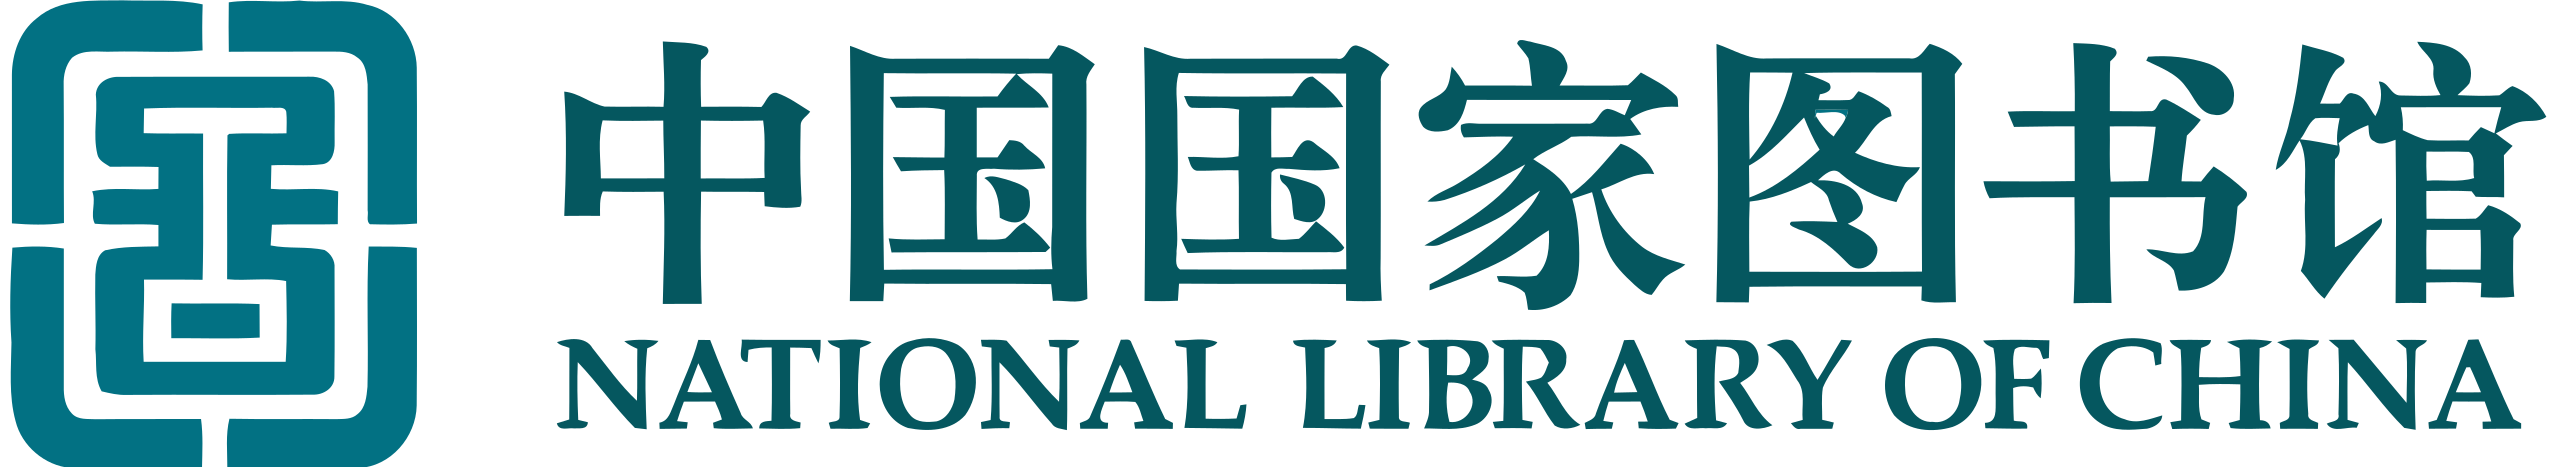 National Library of China logo